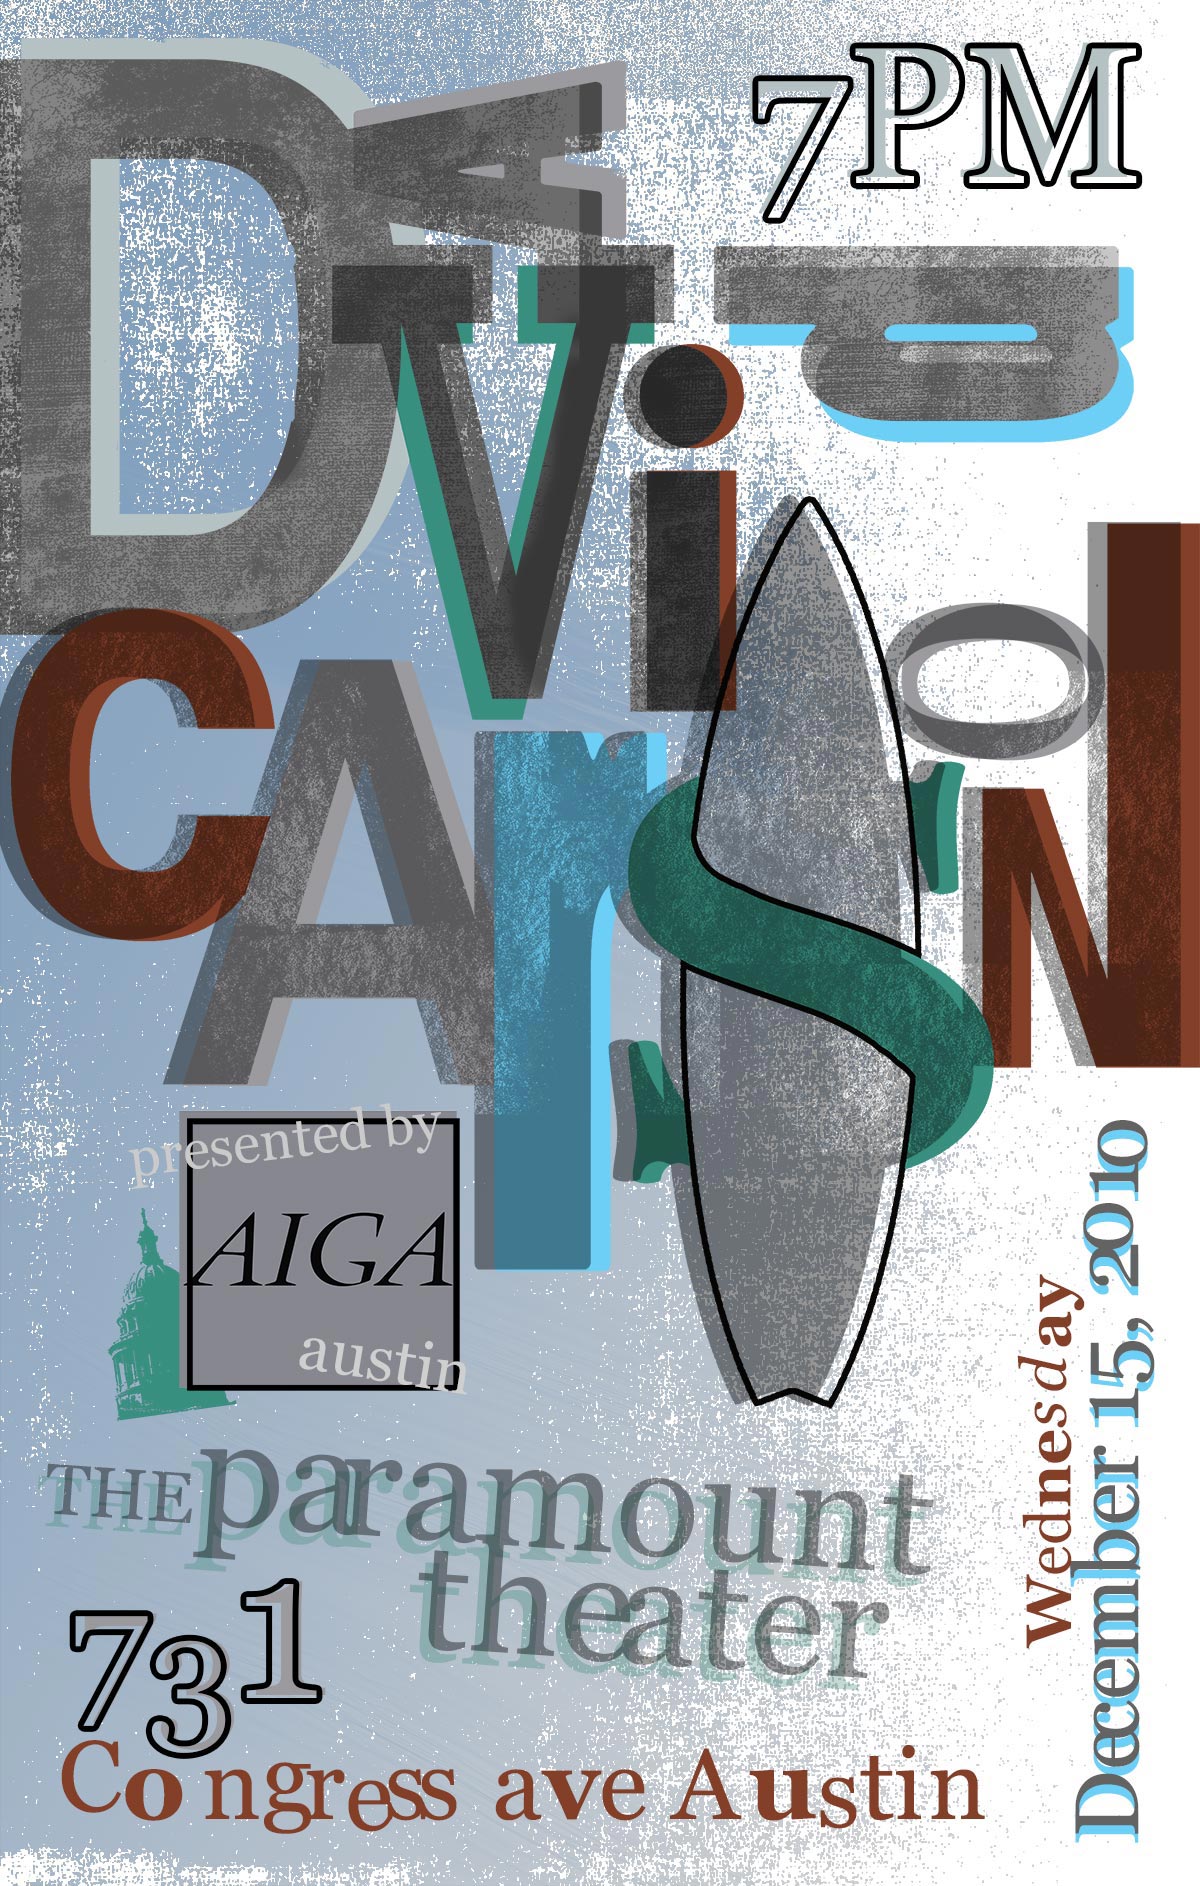 david carson poster